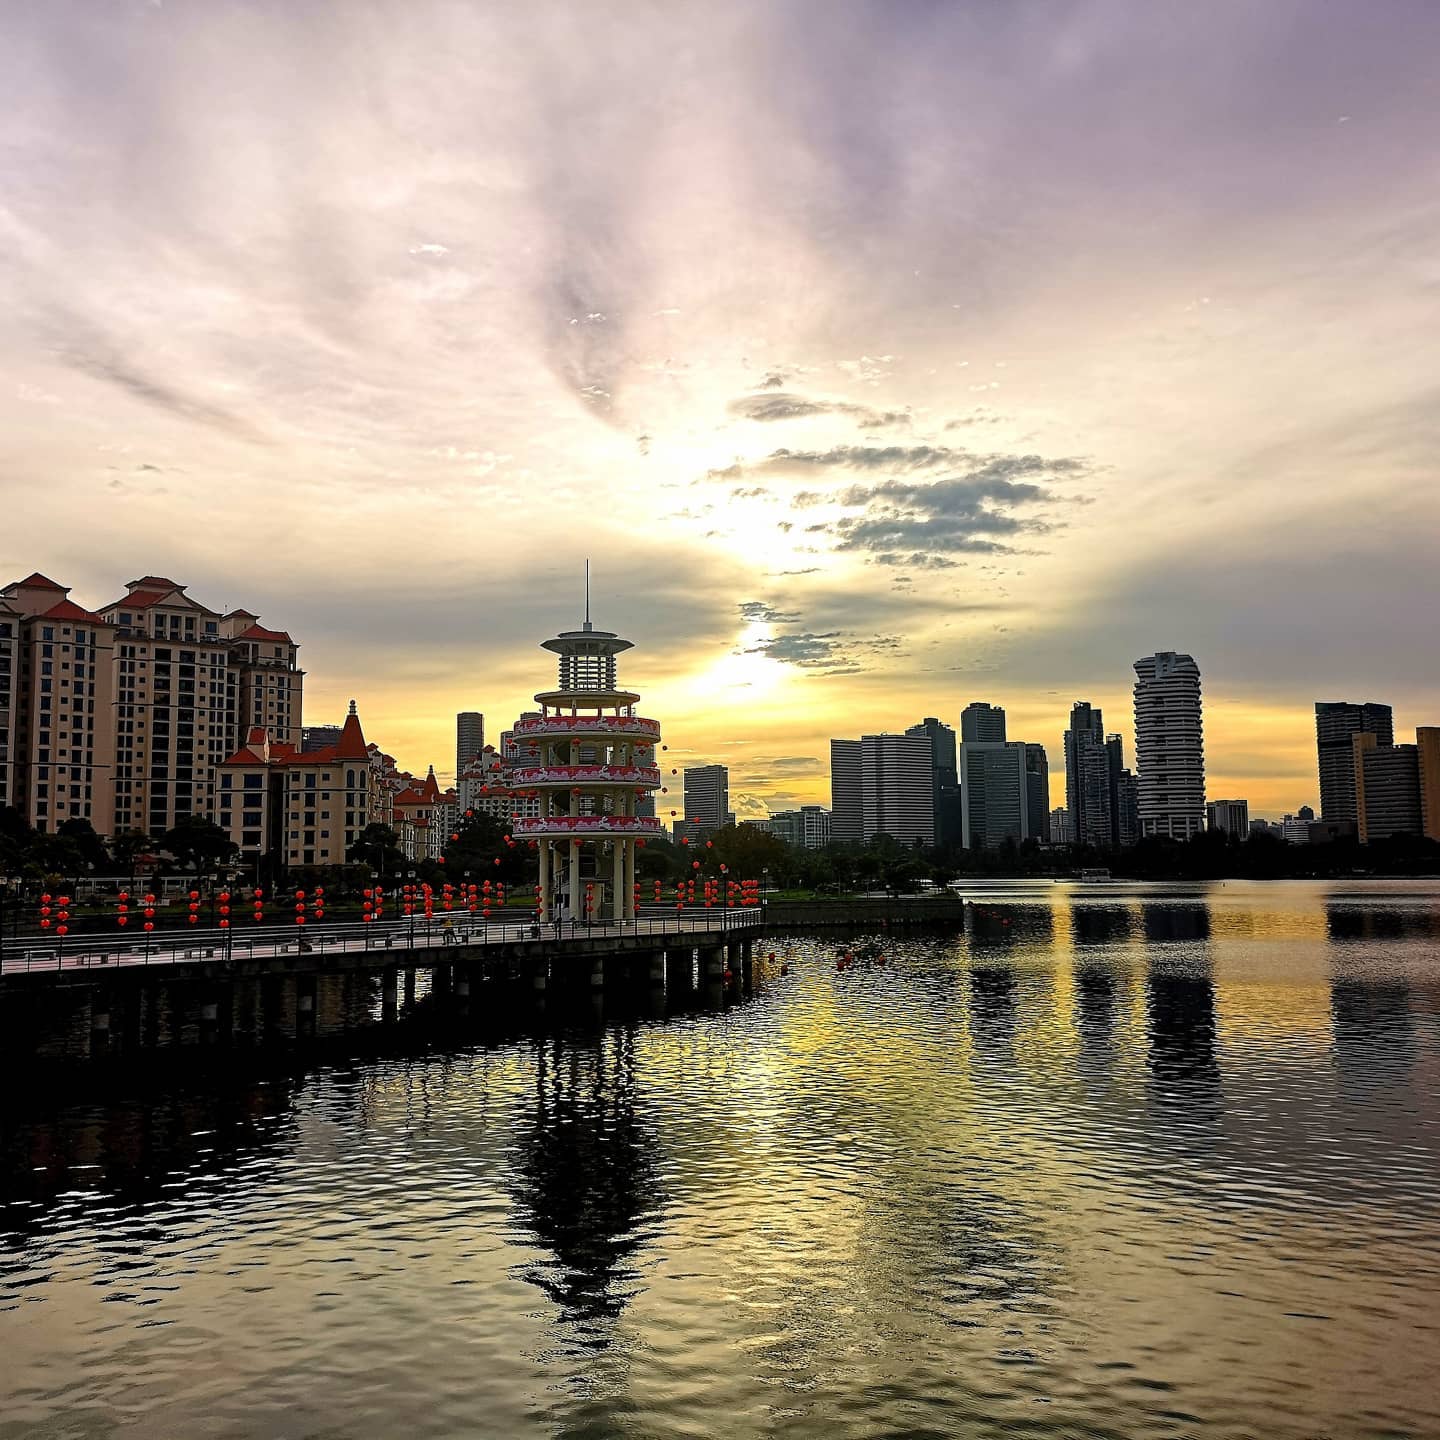 Sunrise & sunset spots in Singapore - Tanjong Rhu sunset